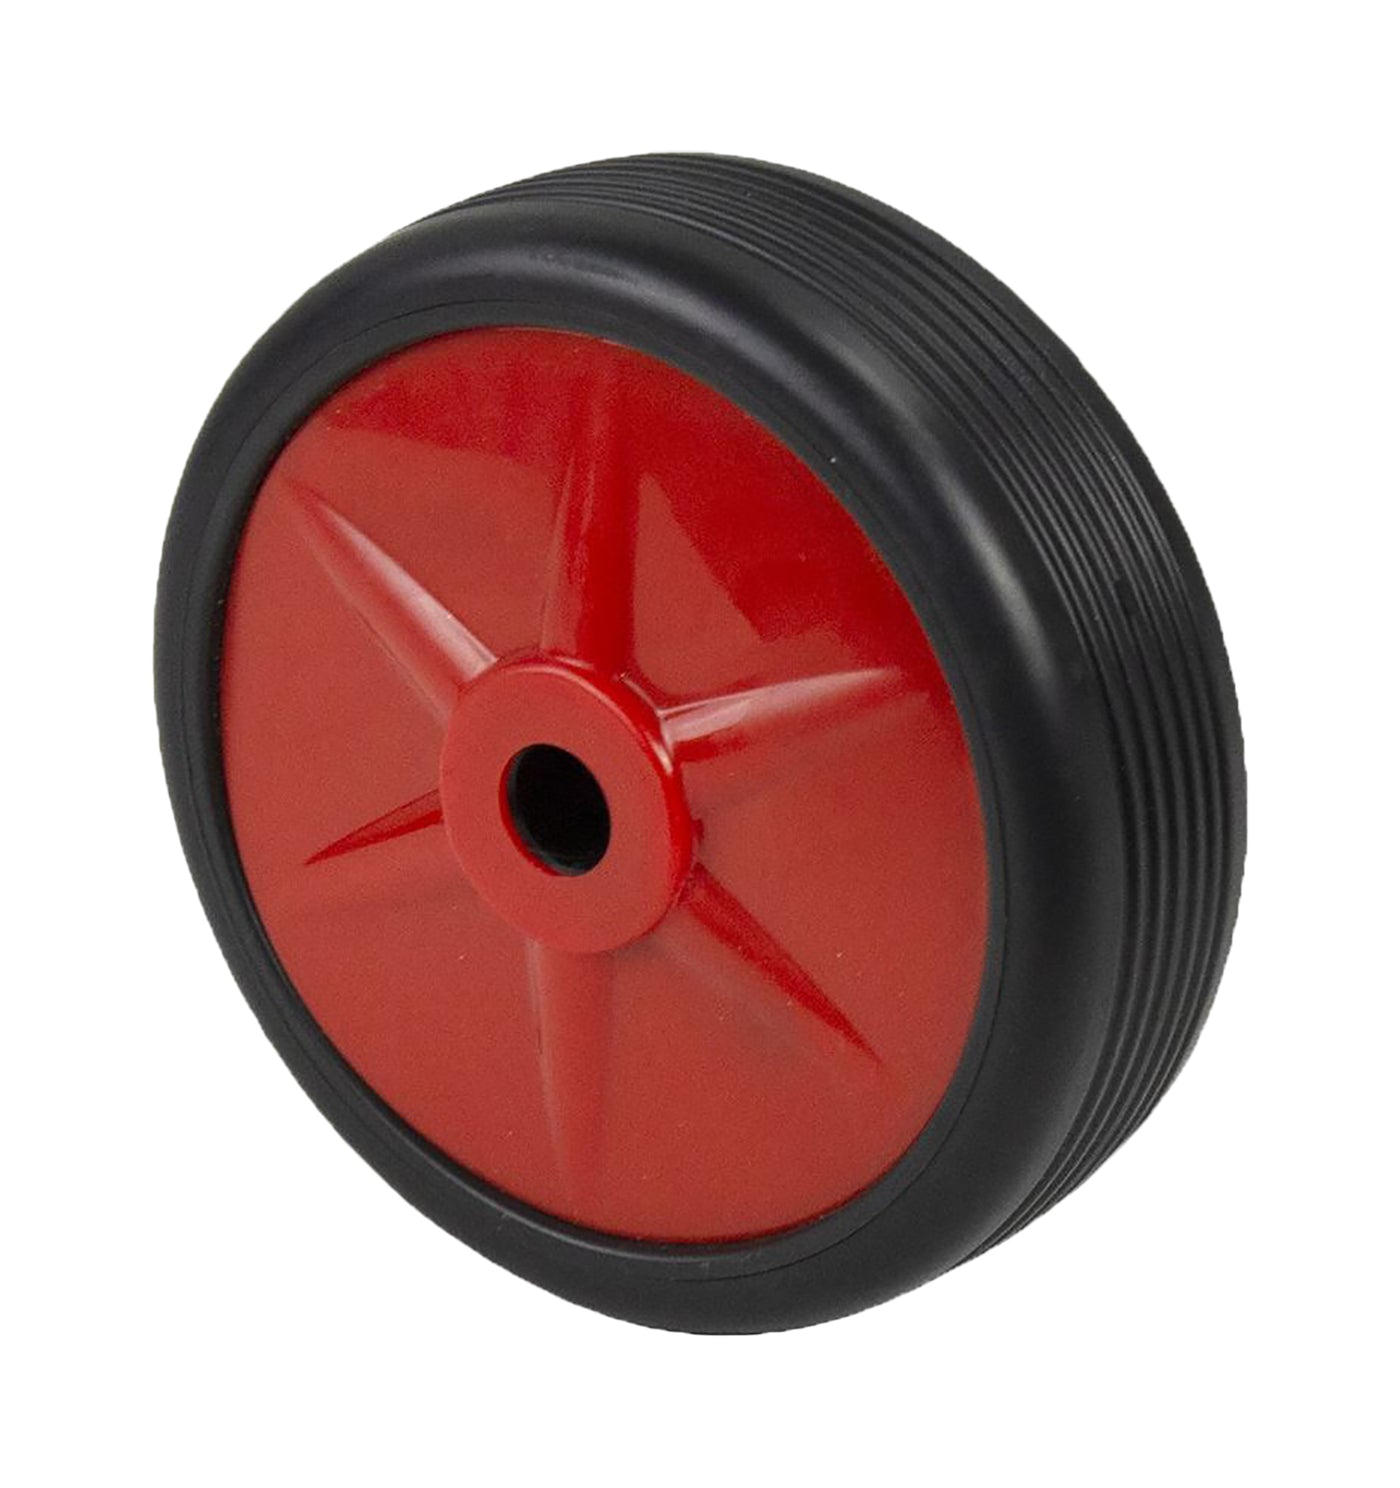 6 inch Replacement Rubber Wheel For Jockey Wheel. Plastic Centre Trailer Caravan